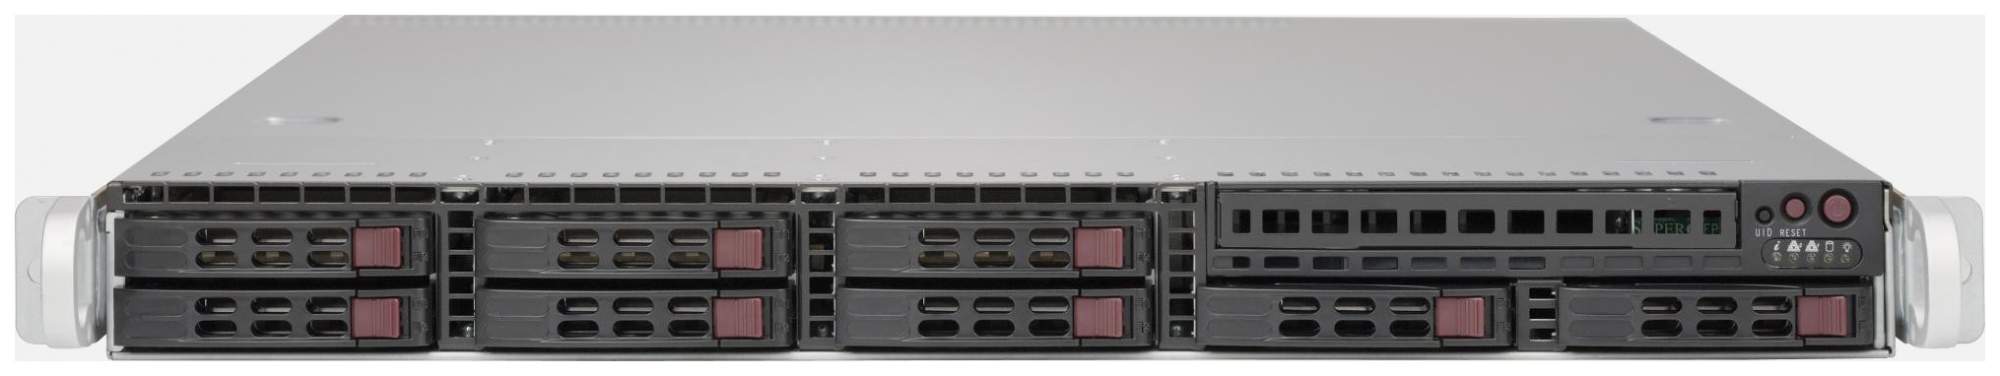 Подробное фото Сервер Supermicro 1027R 2x Xeon  E5-2620 32Gb 10600R DDR3 8x noHDD 2.5"  RAID LSI 2208 SAS/SATA/SSD, 2xPSU 500W